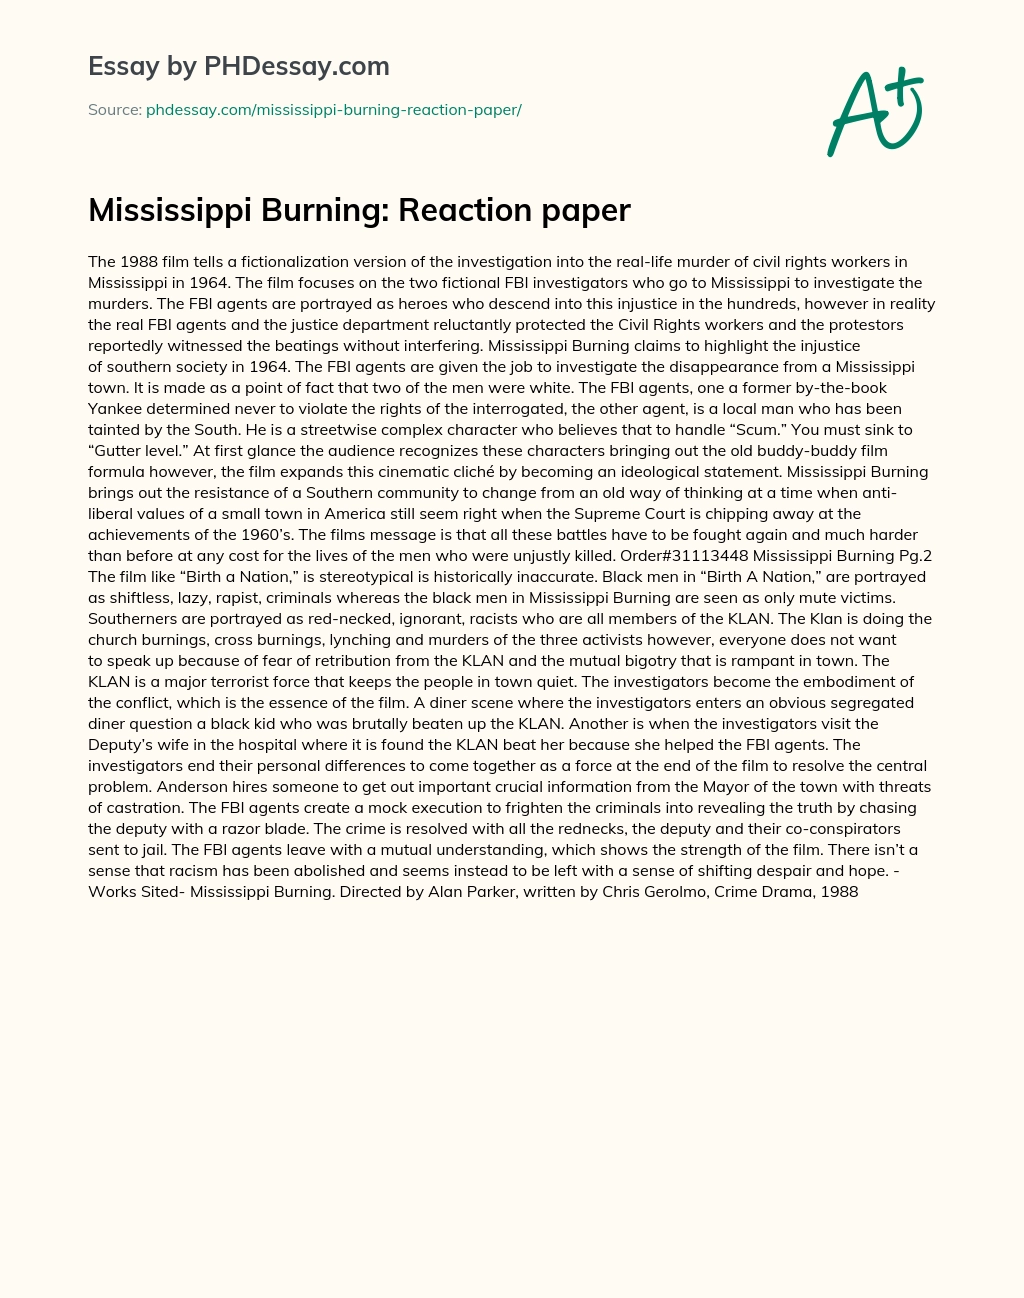 Mississippi Burning: Reaction paper essay